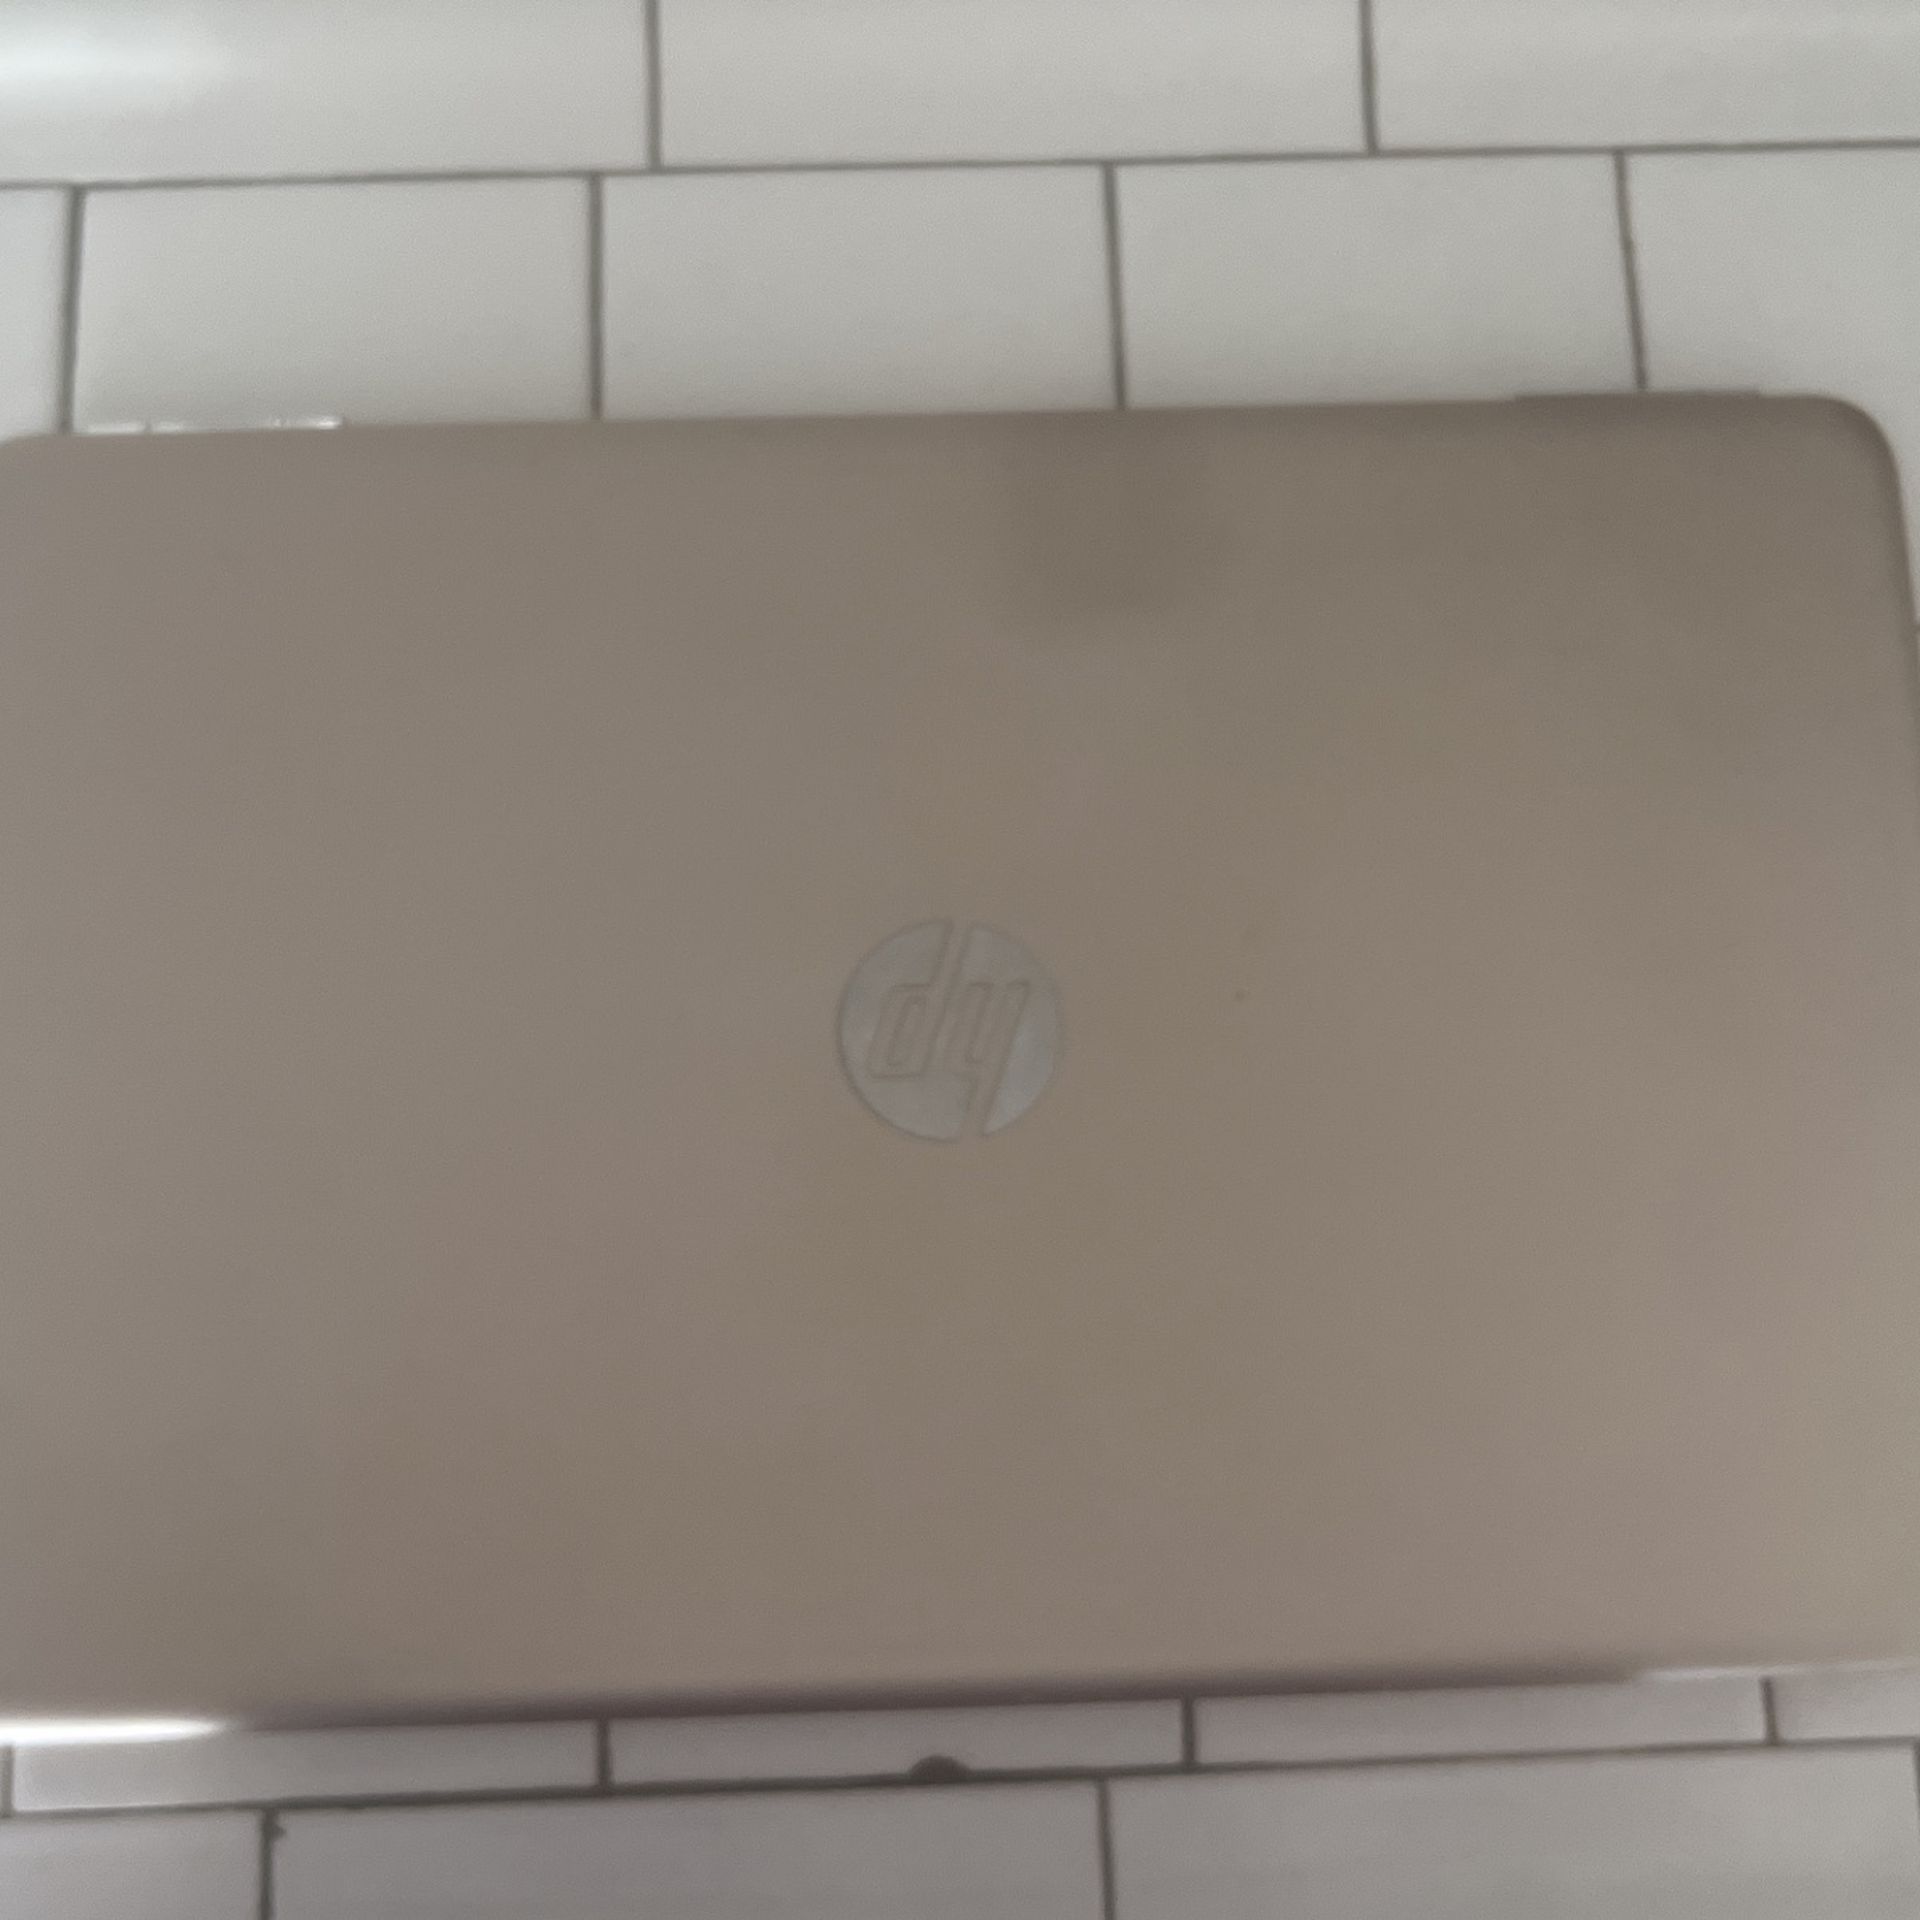 HP laptop 